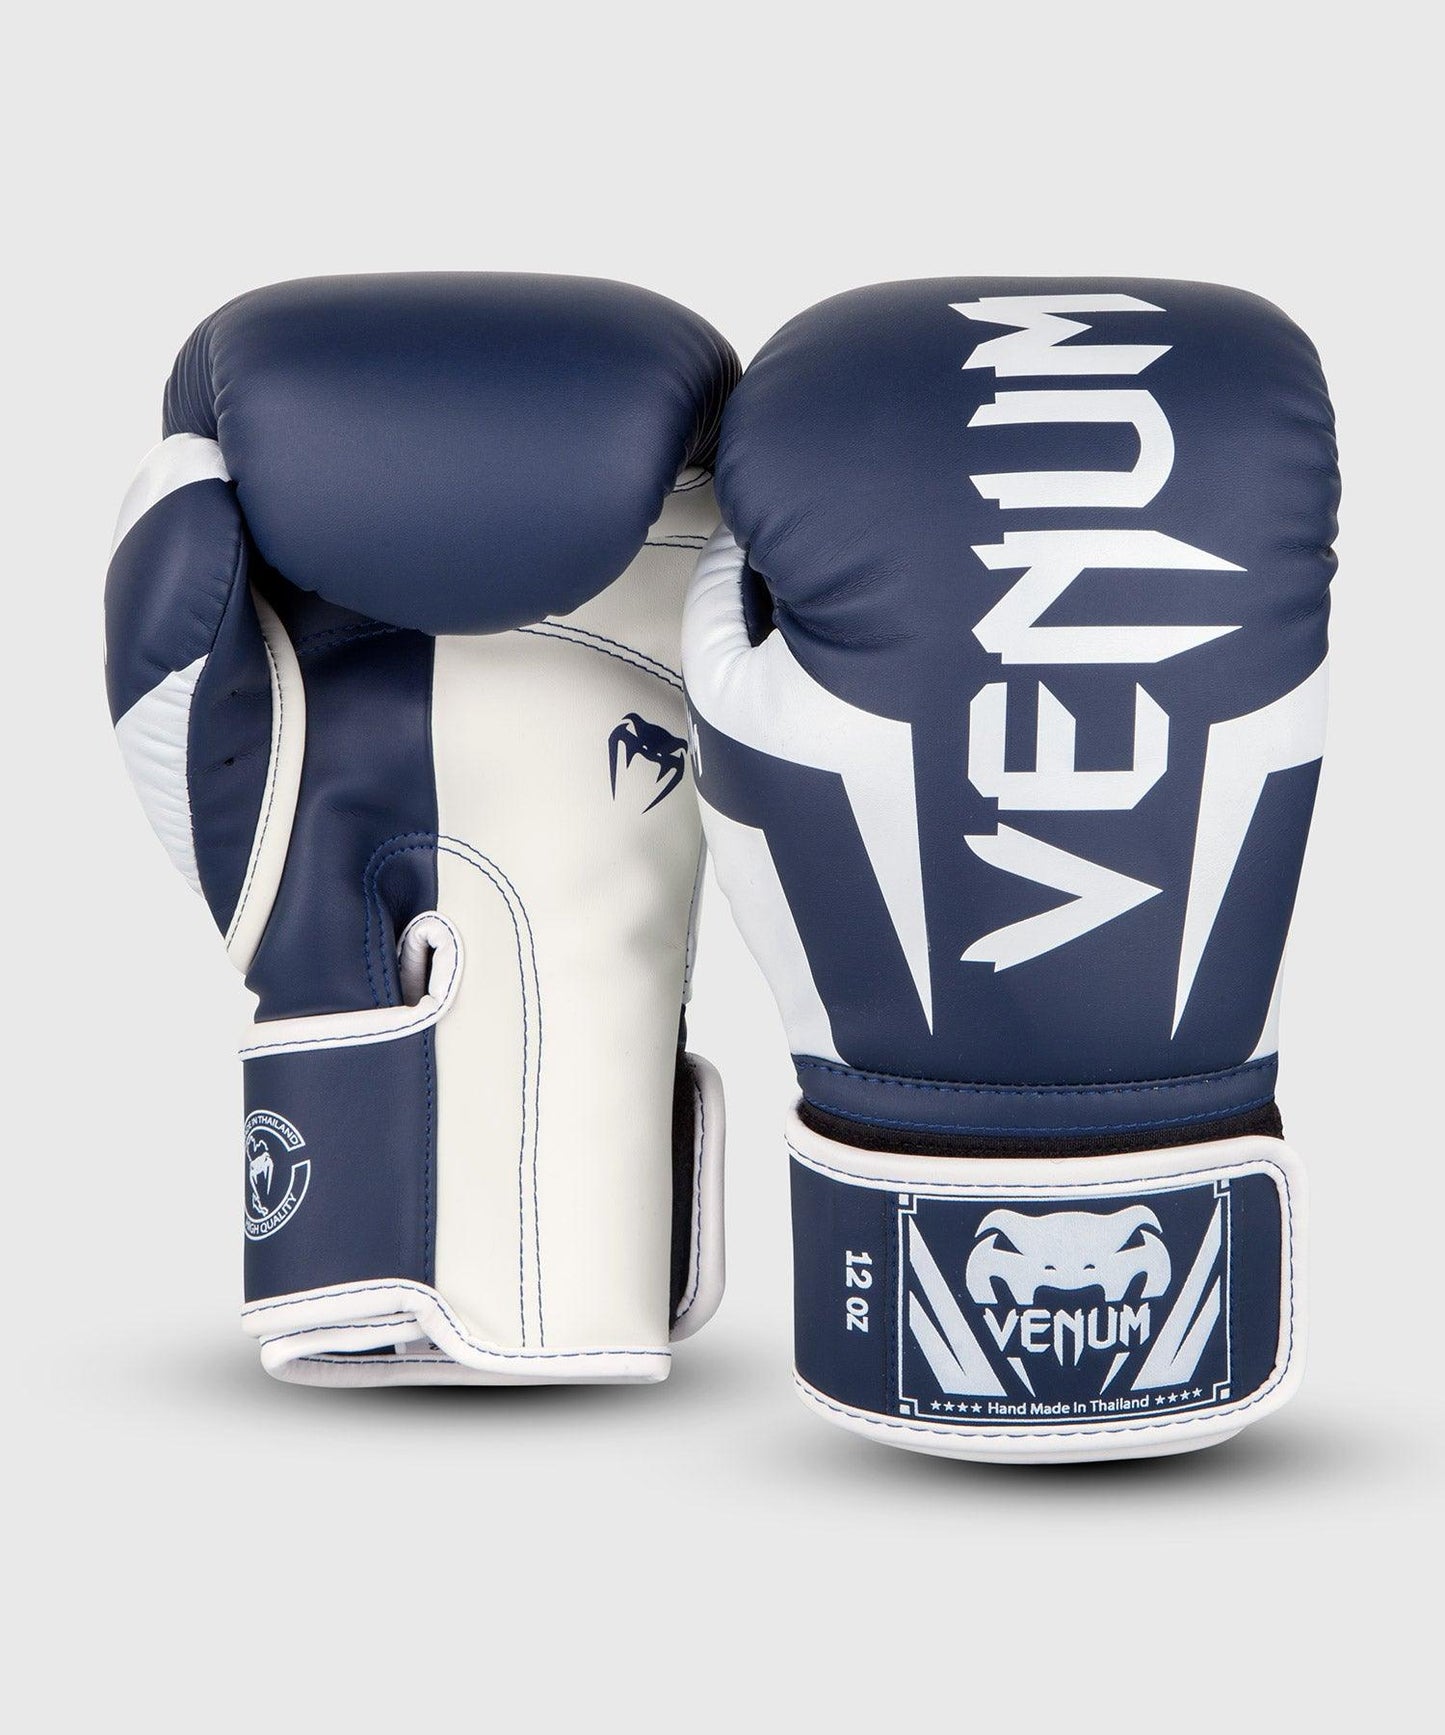 Venum Elite Boxing Gloves - White/Navy Blue Picture 2